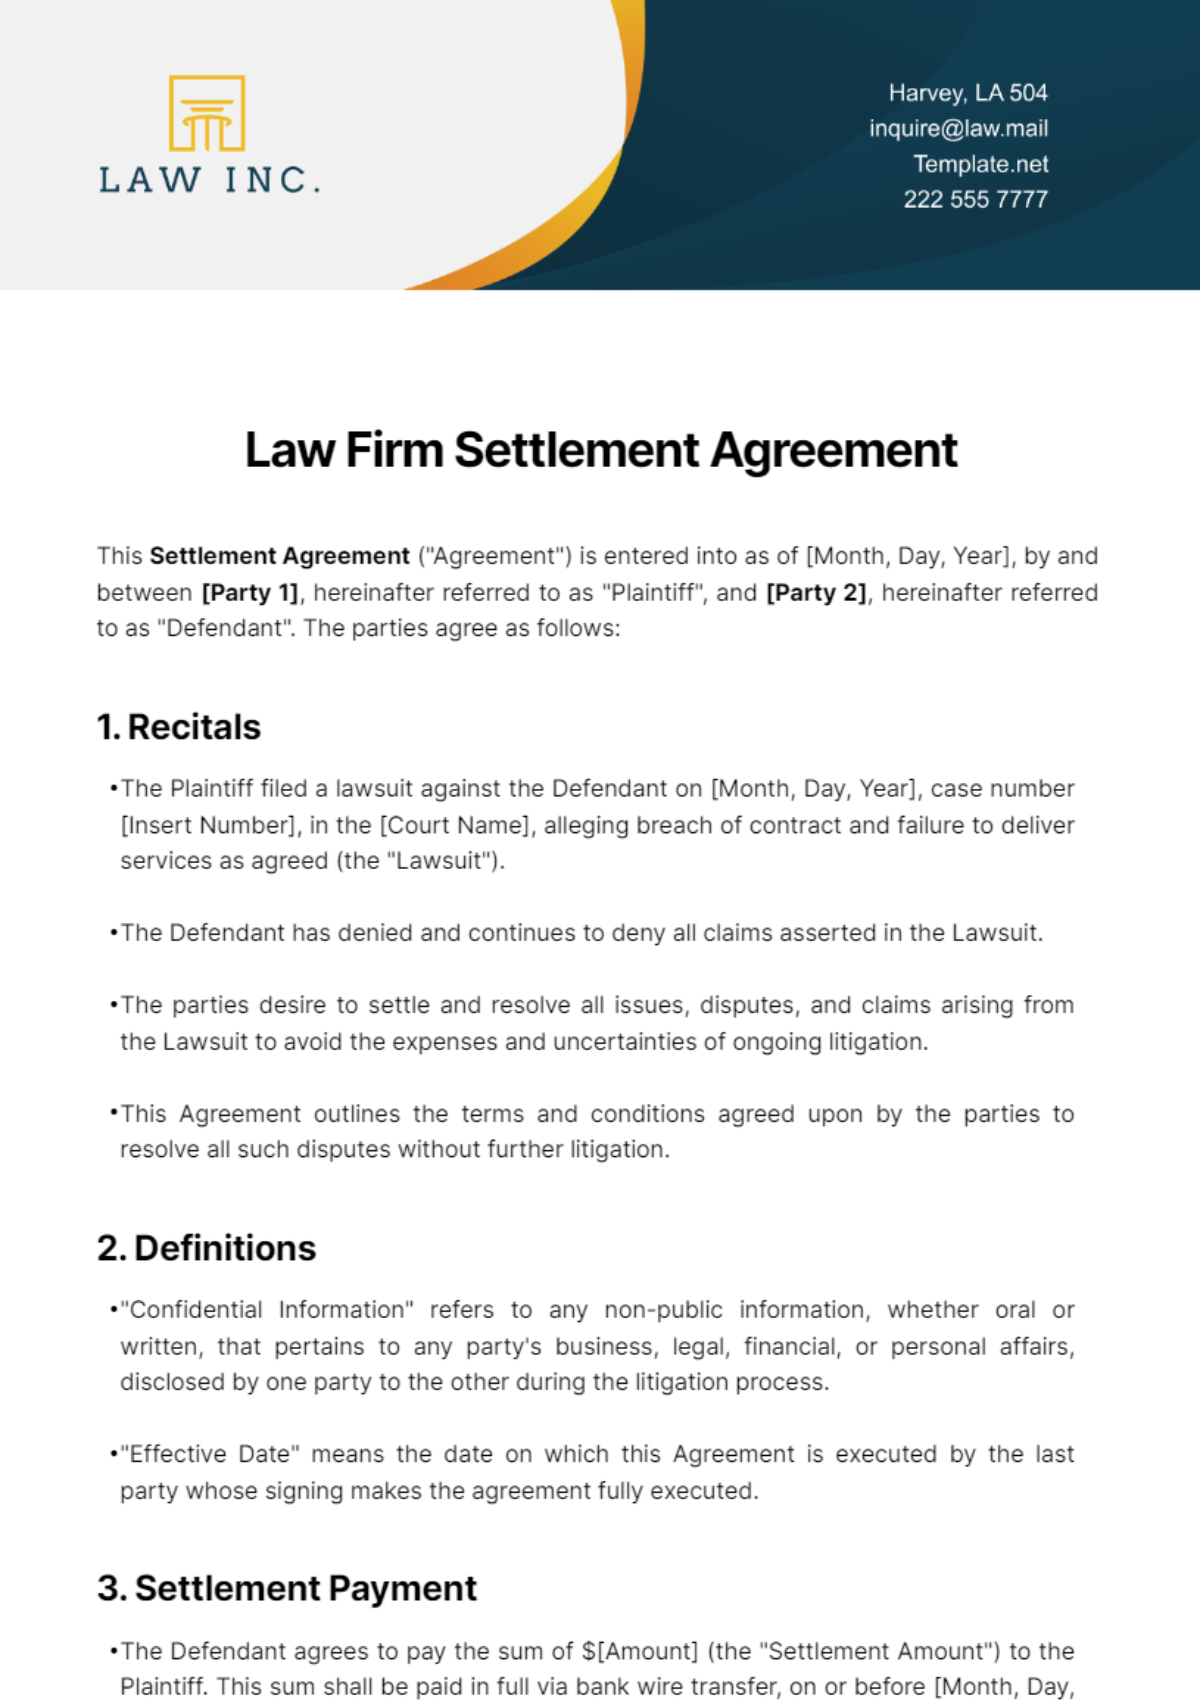 Law Firm Settlement Agreement Template